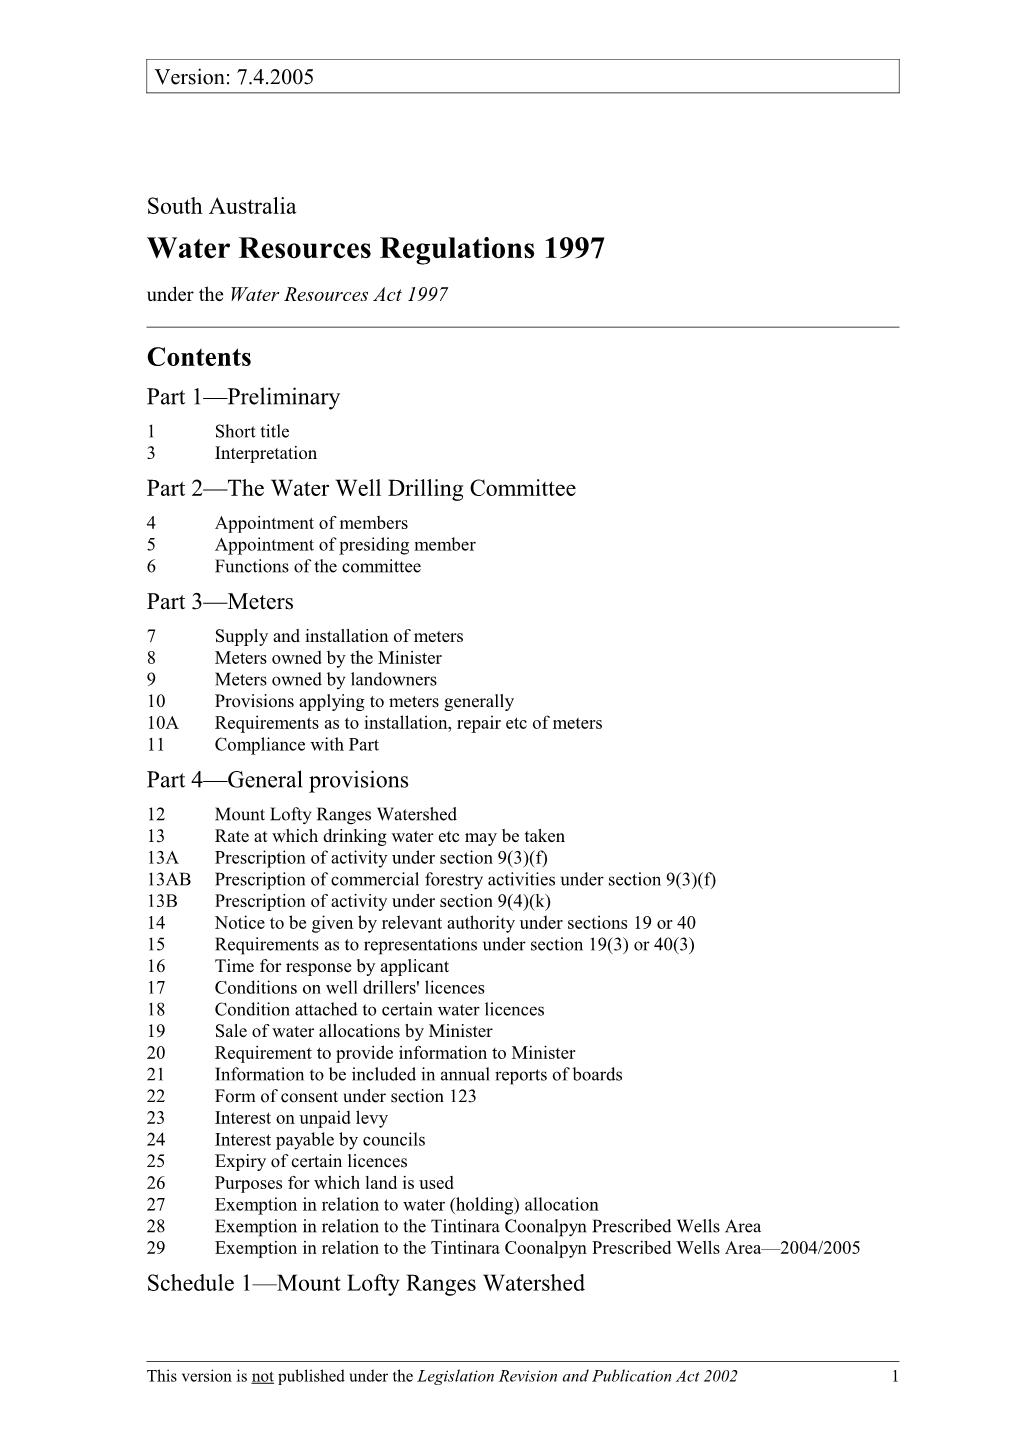 Water Resources Regulations1997